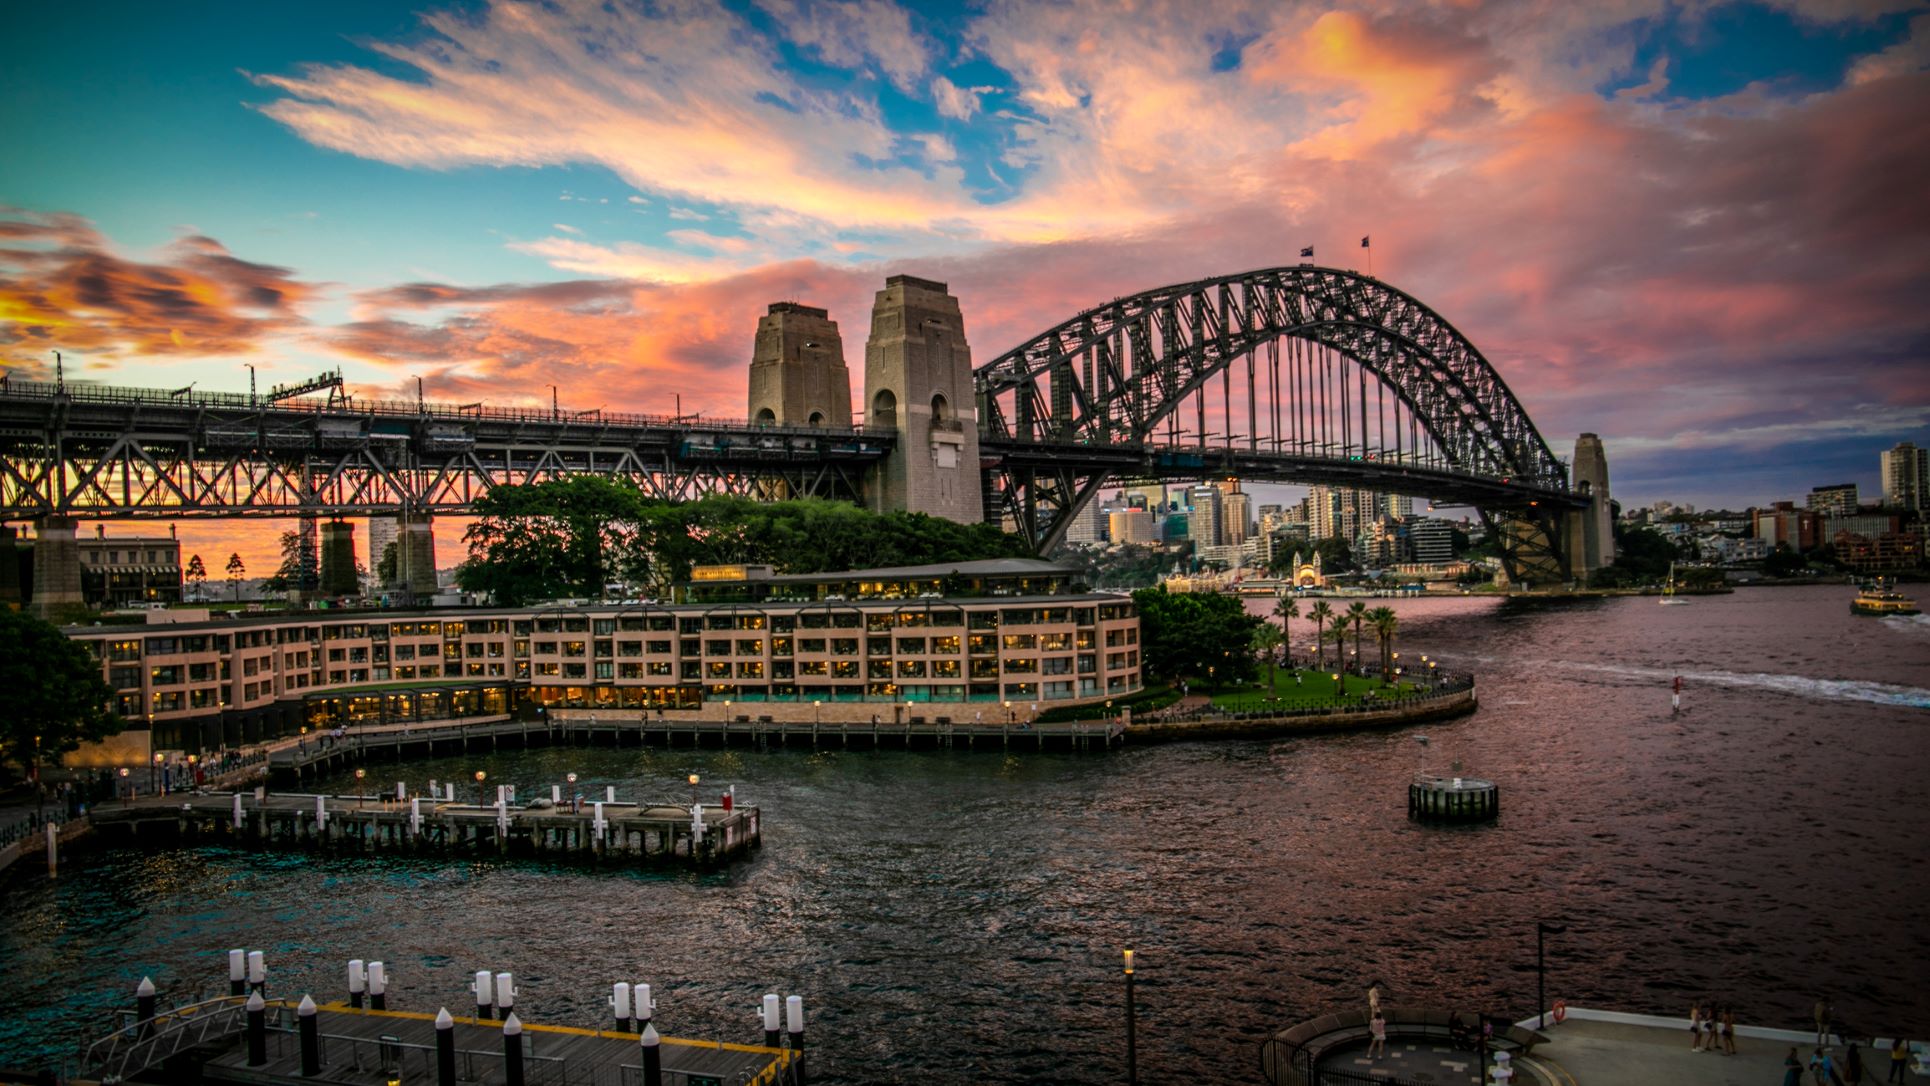 Sydney Harbour Bridge sml